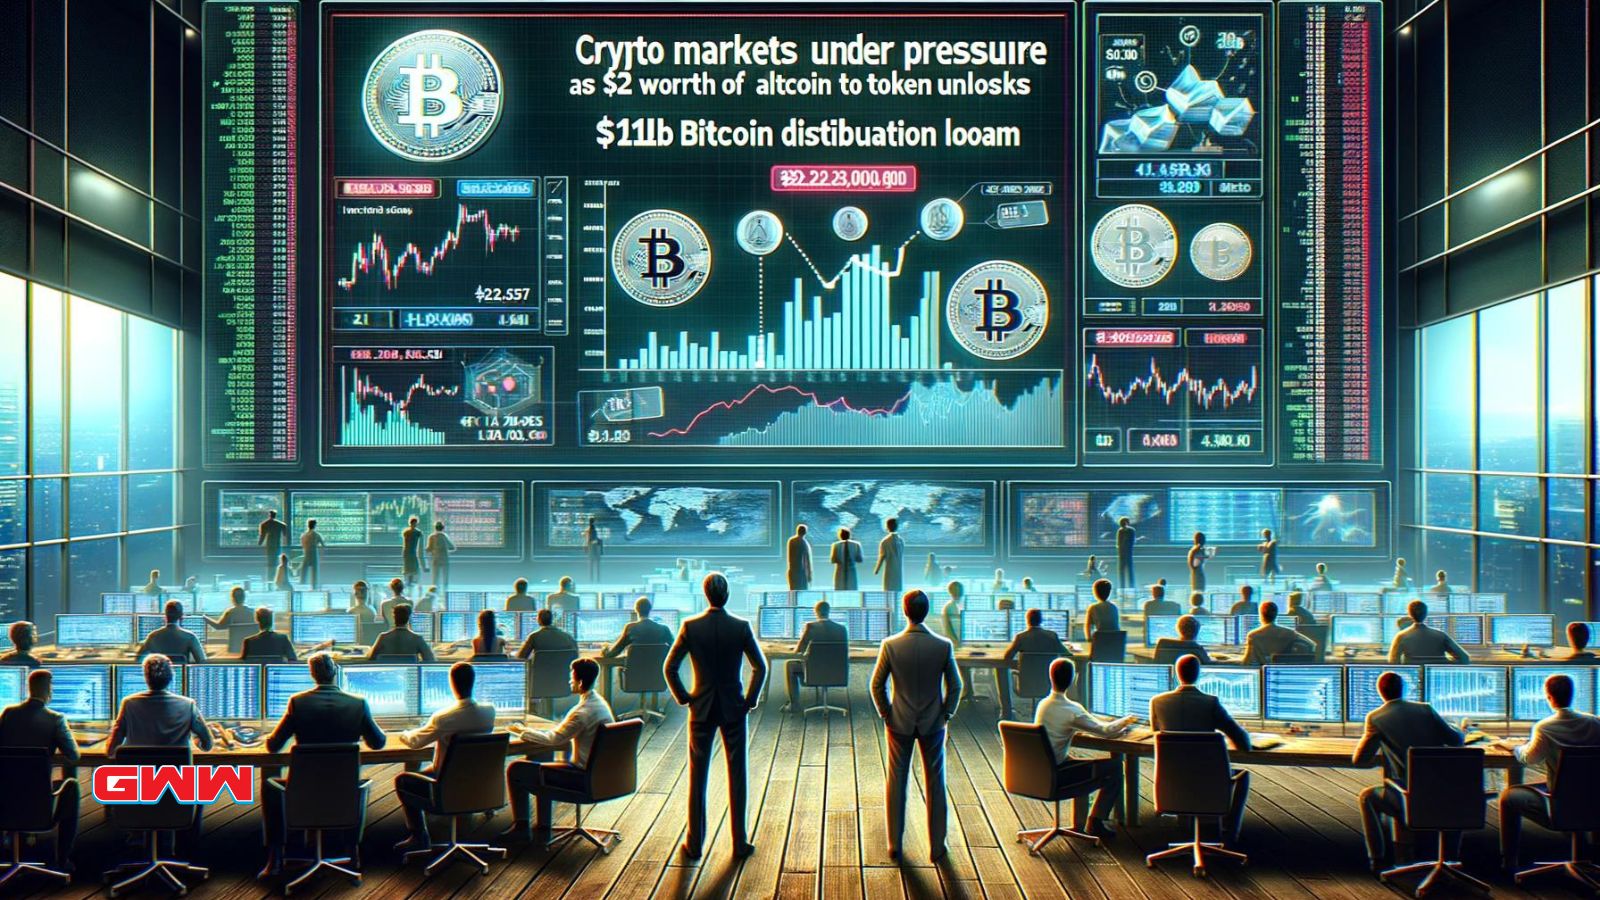 Traders monitor altcoin unlocks and Bitcoin distribution risks